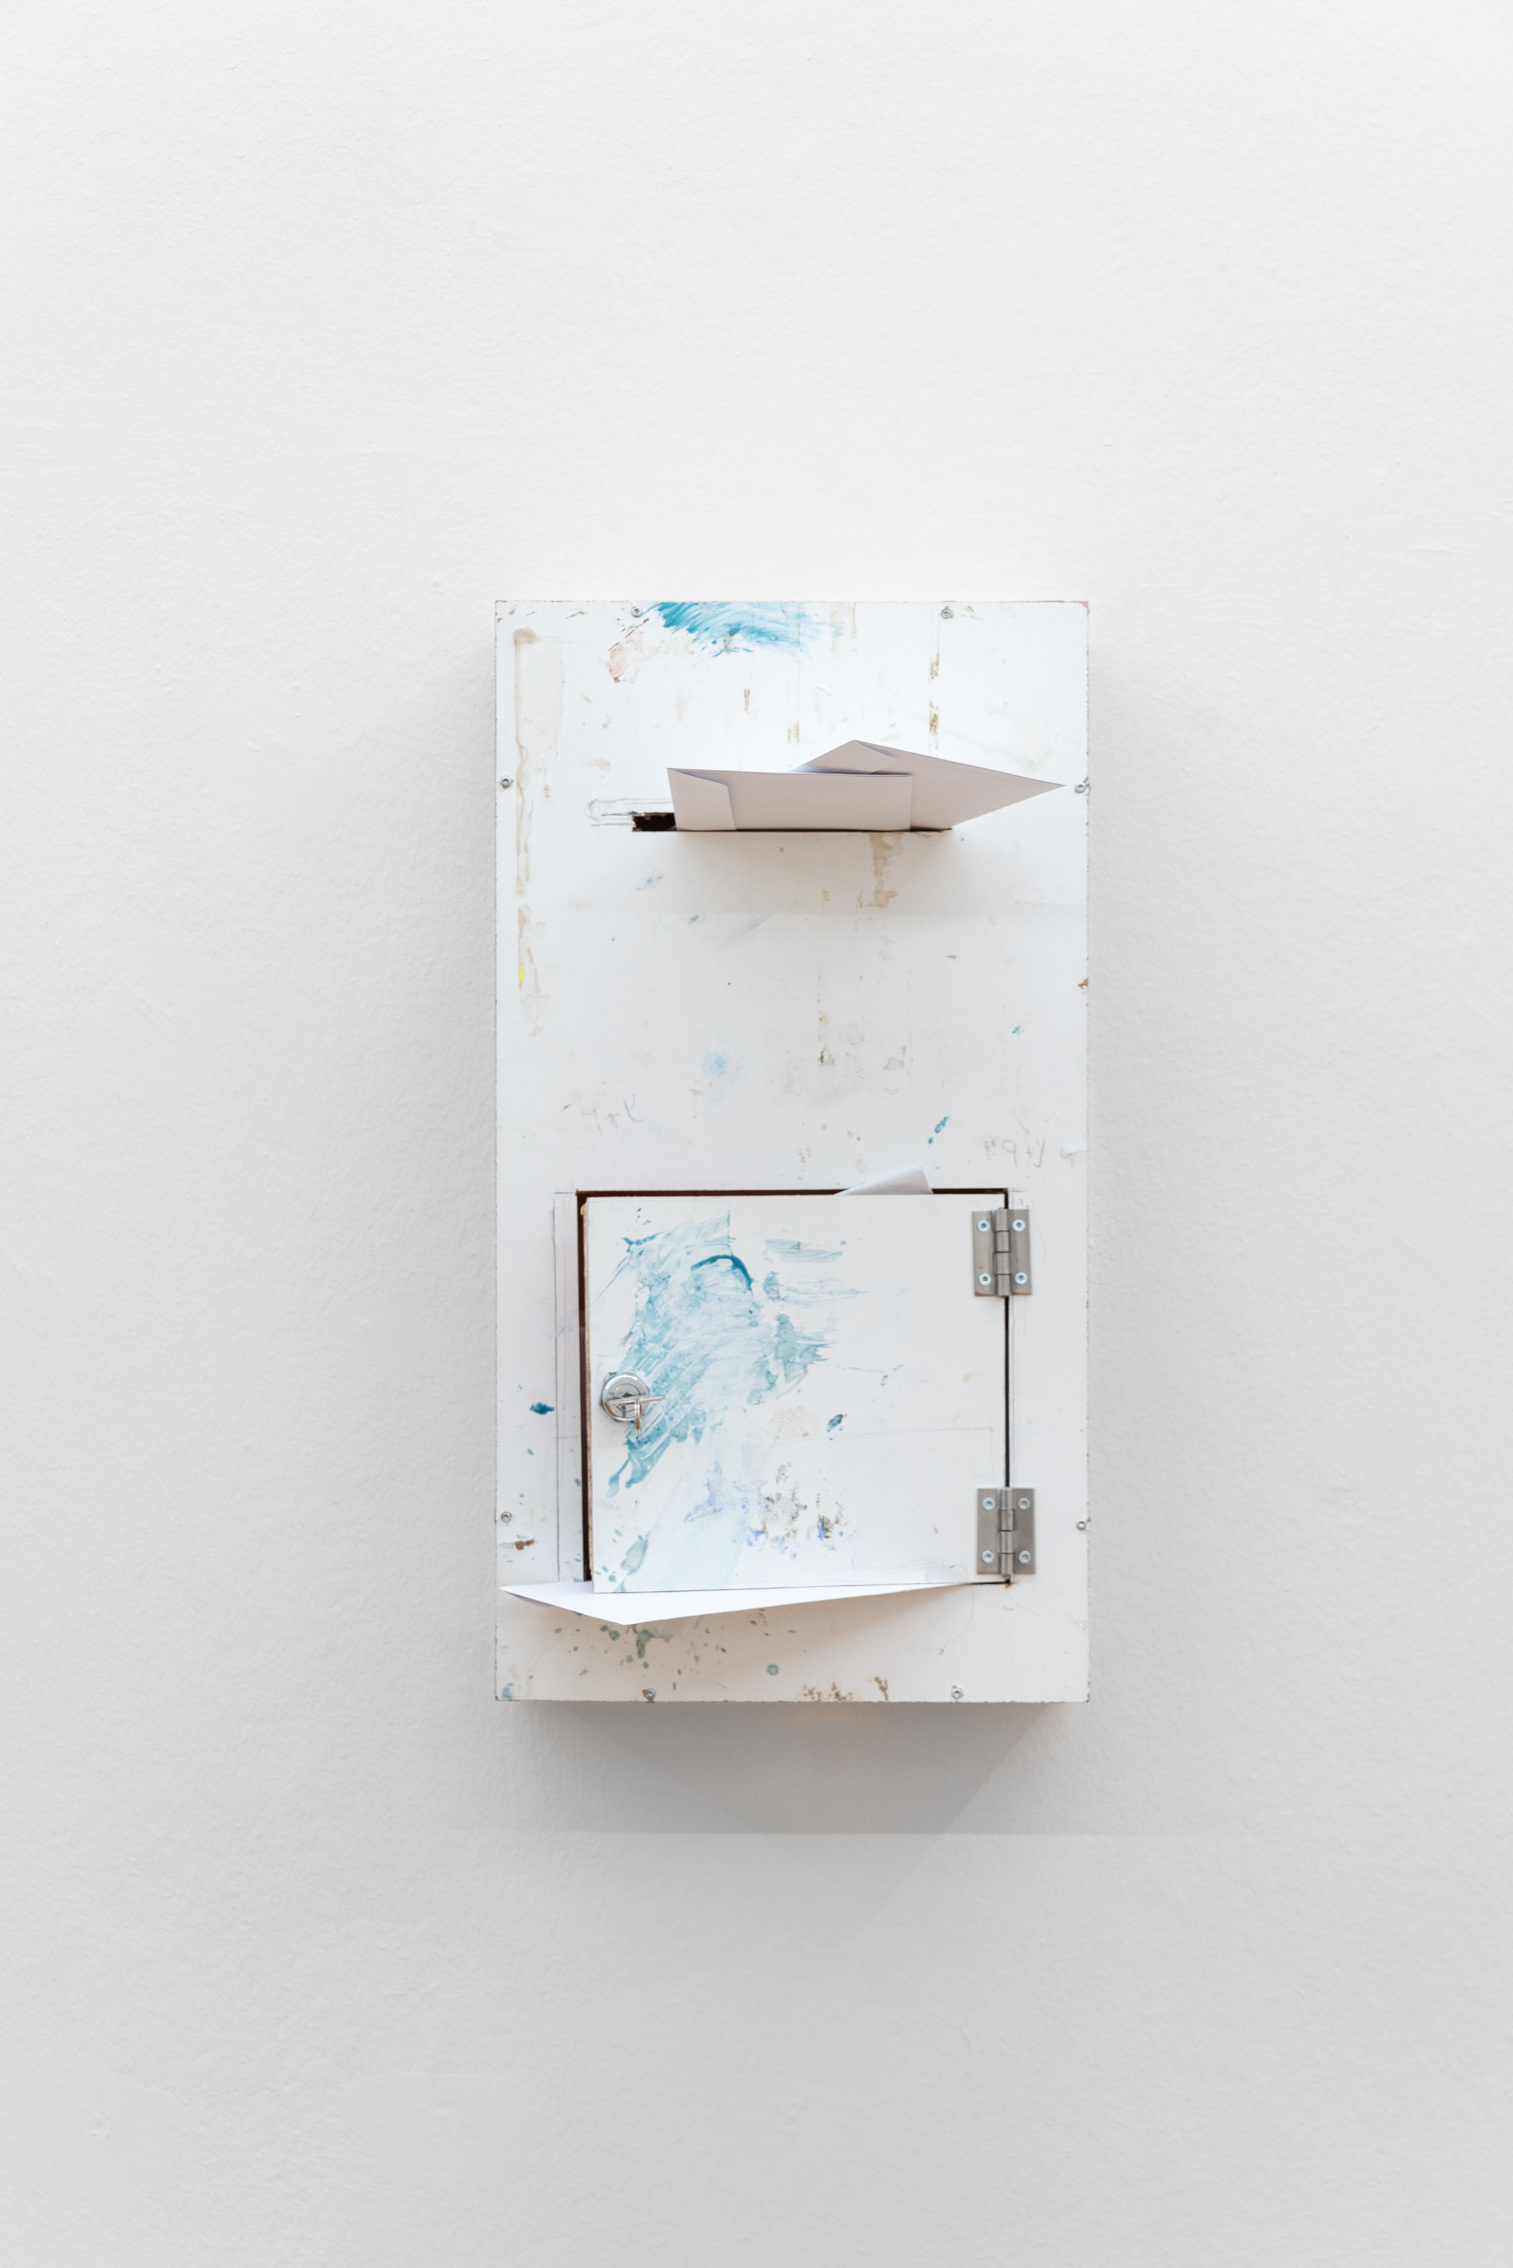 Patrick Ostrowsky, almsbox III (moved, address unknown), 2024, wood, plywood, paper, stainless steel, epoxy resin, key, 52 x 28 x 11 cm